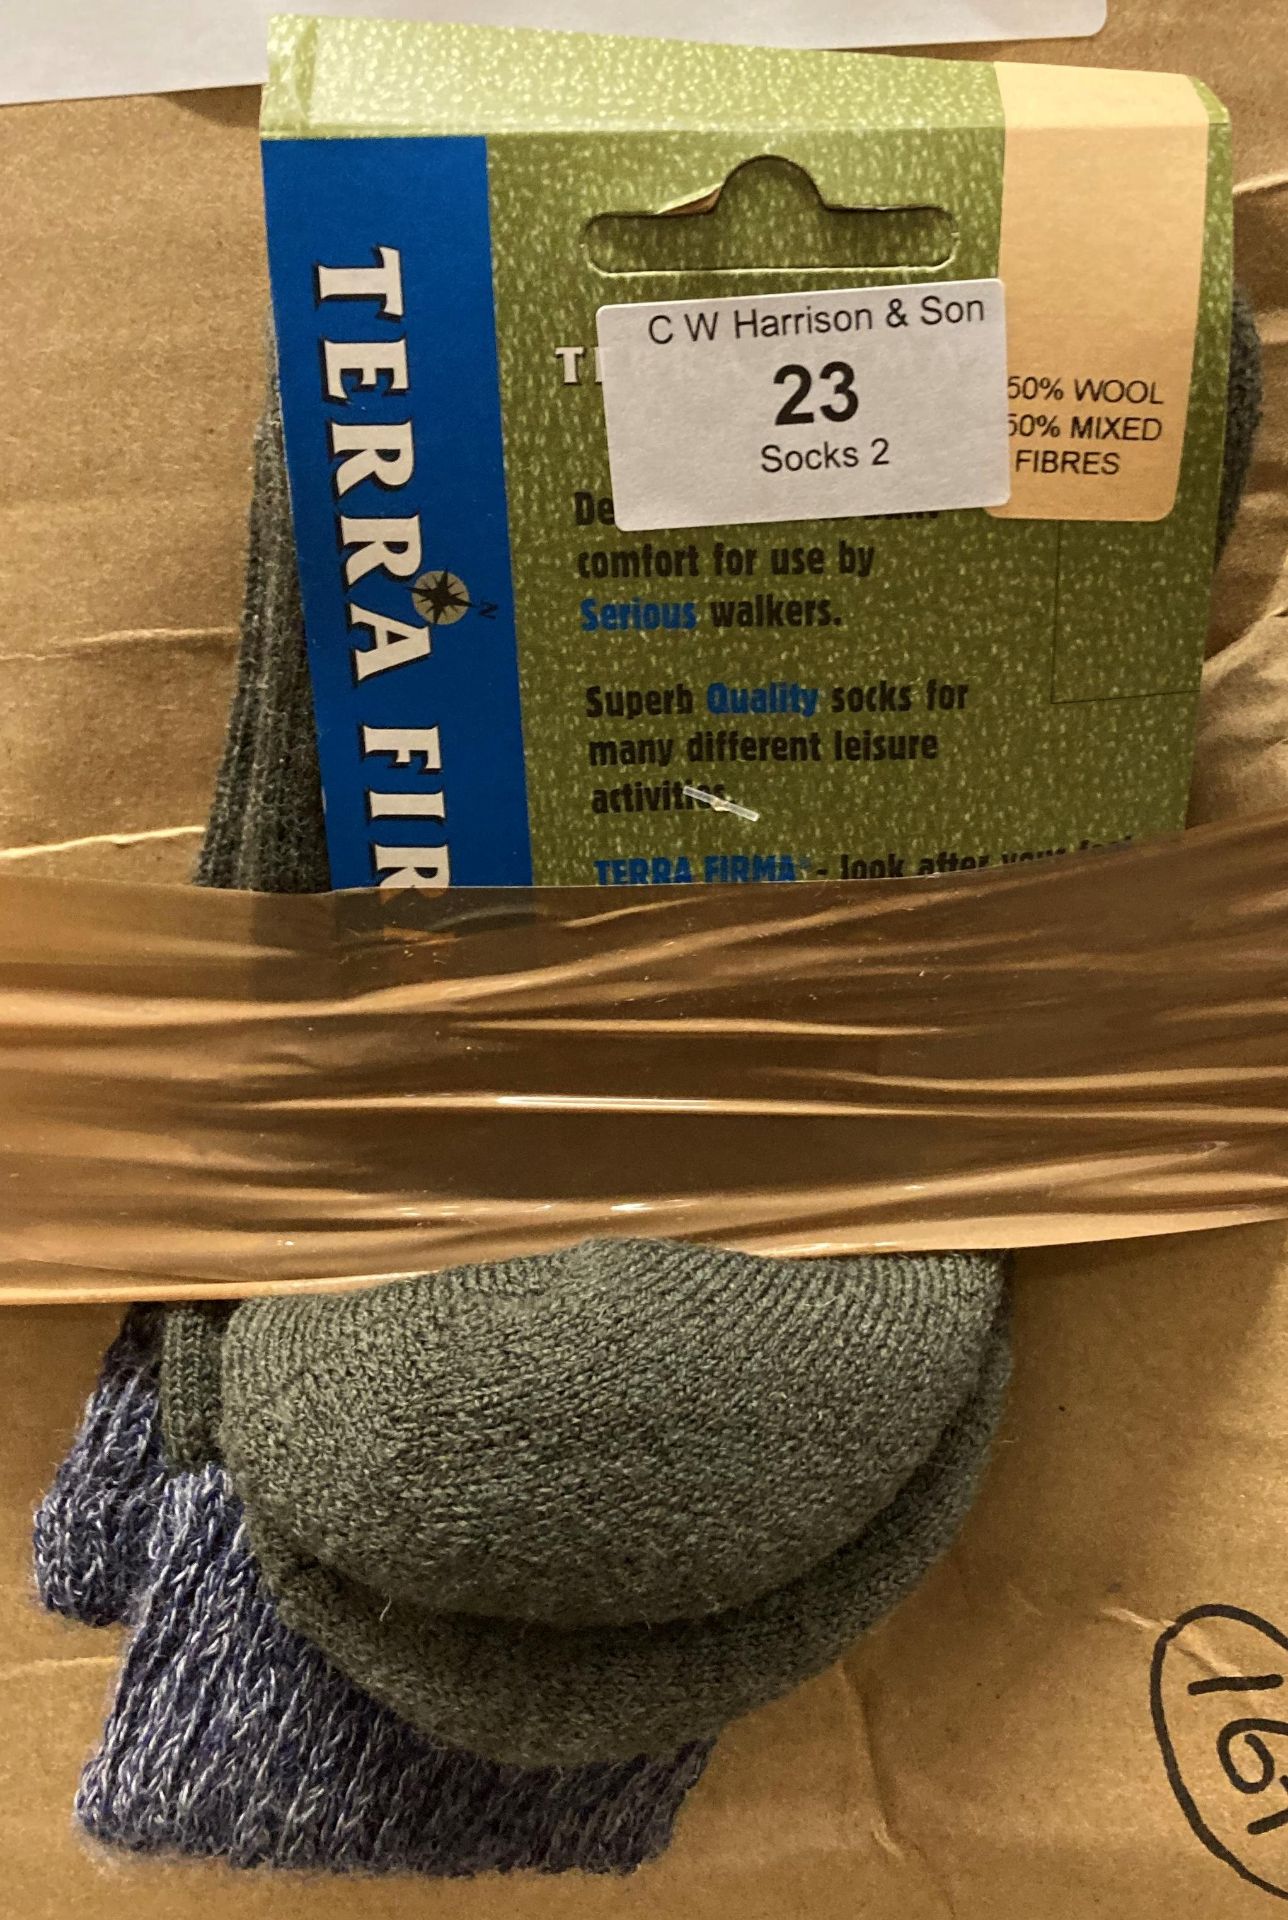 46 x pairs of Terra Firma trekking socks (wool/nylon) size 3-6,